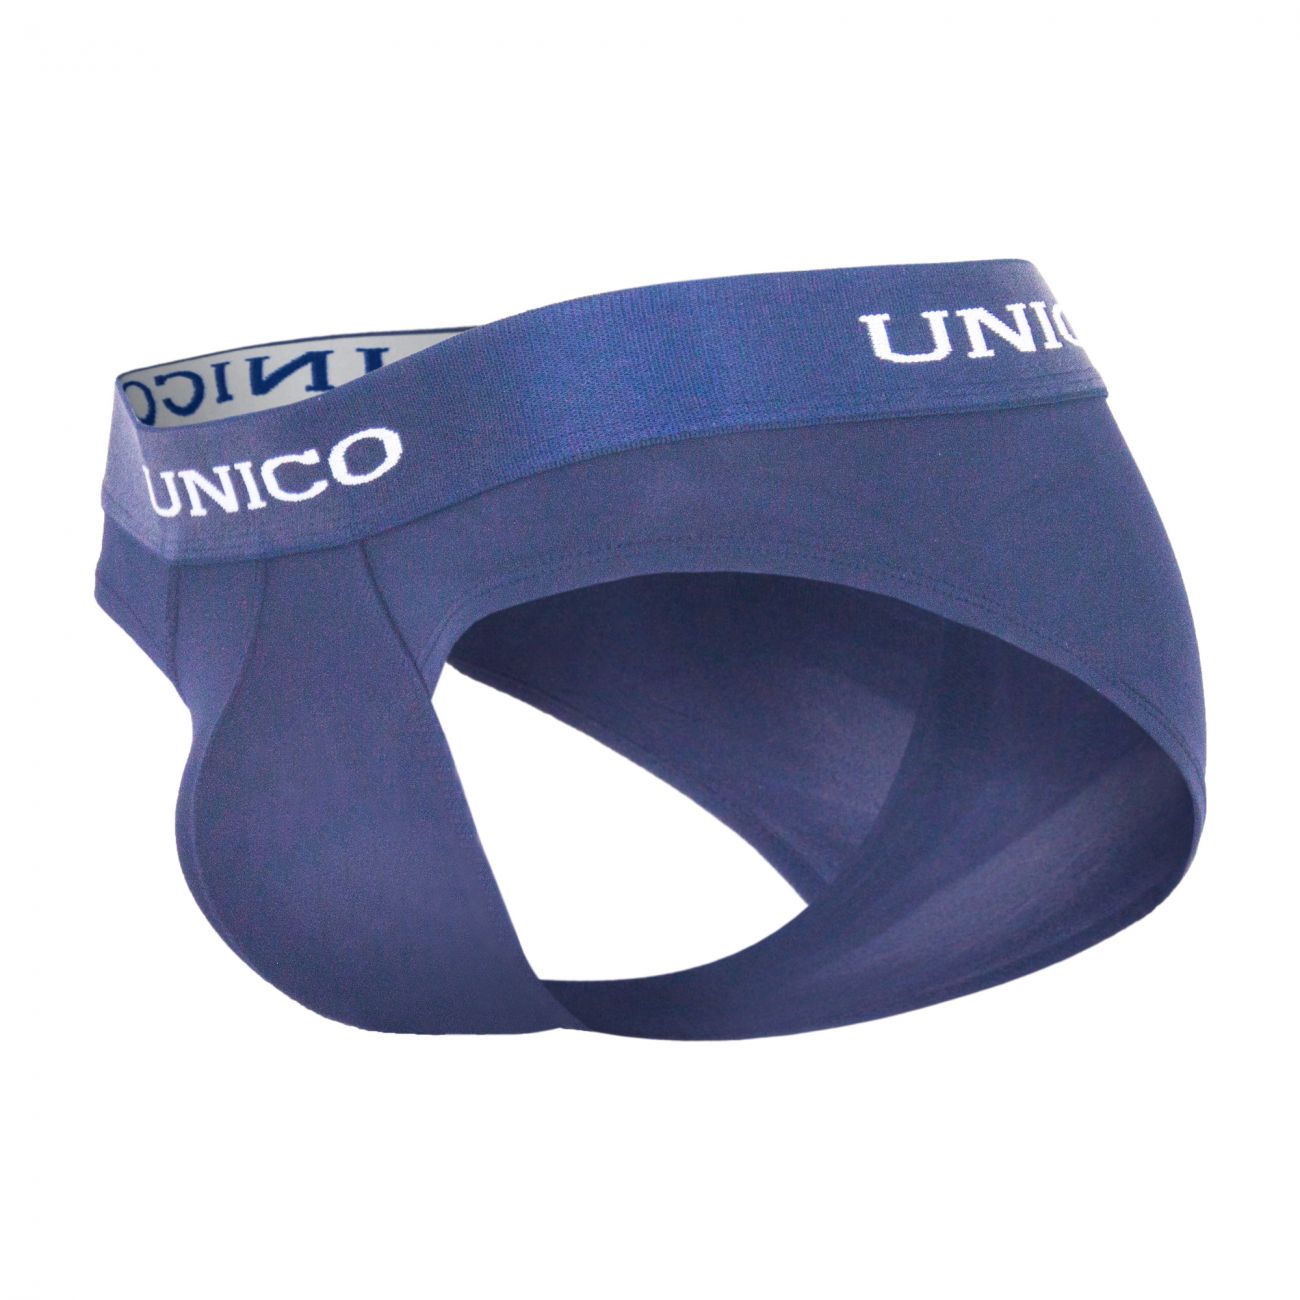 Unico 1600050382 Briefs Profundo Blue